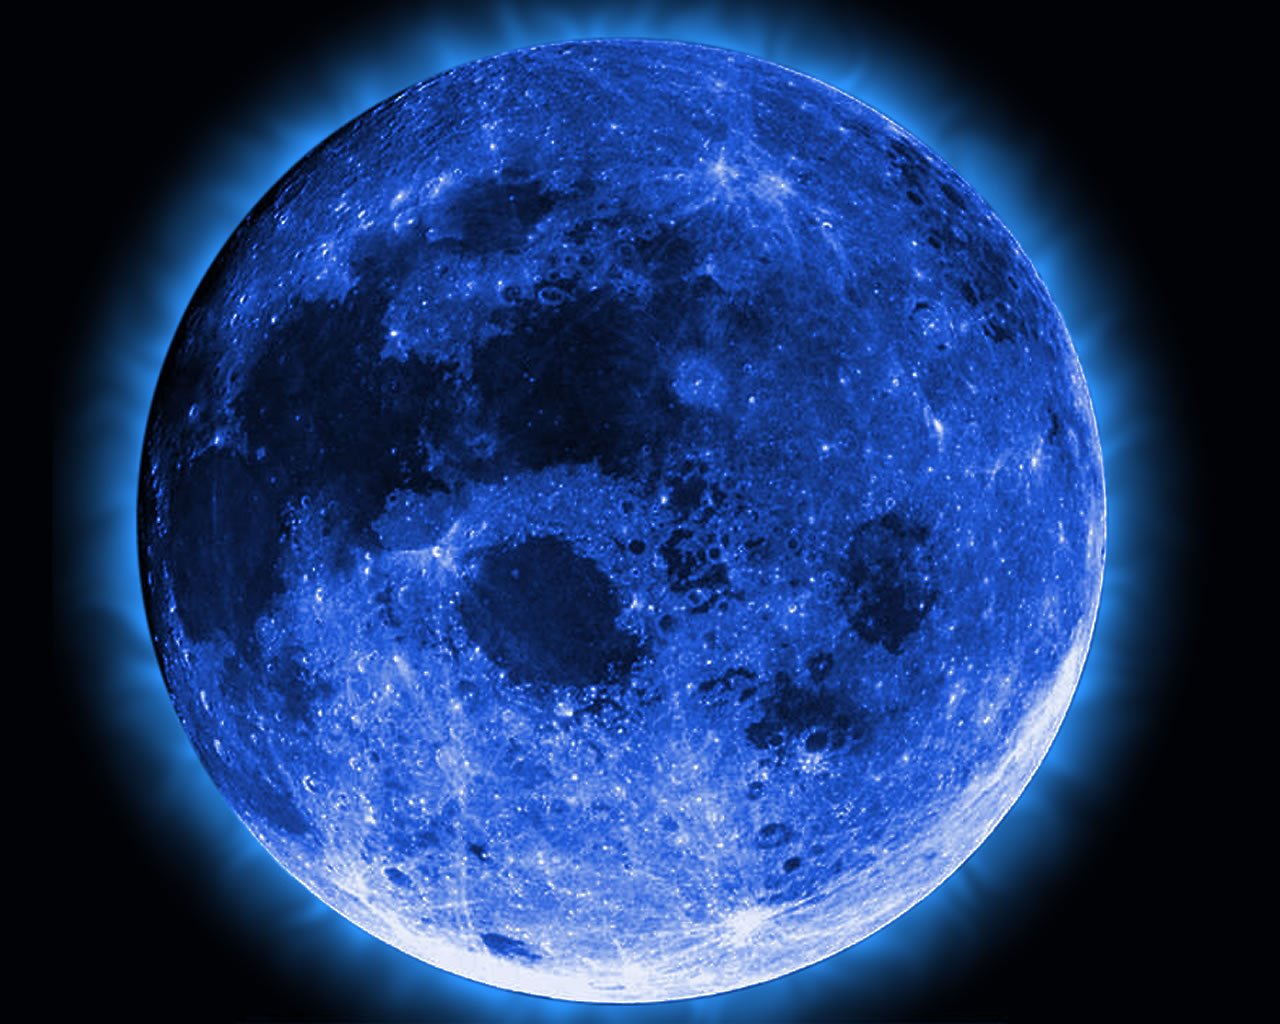 http://2.bp.blogspot.com/-lRIfhUzw2lg/USDyjo1XIAI/AAAAAAAAAQM/TM899VSyZOw/s1600/Blue-Full-Moon-Desktop-Wallpaper.jpg